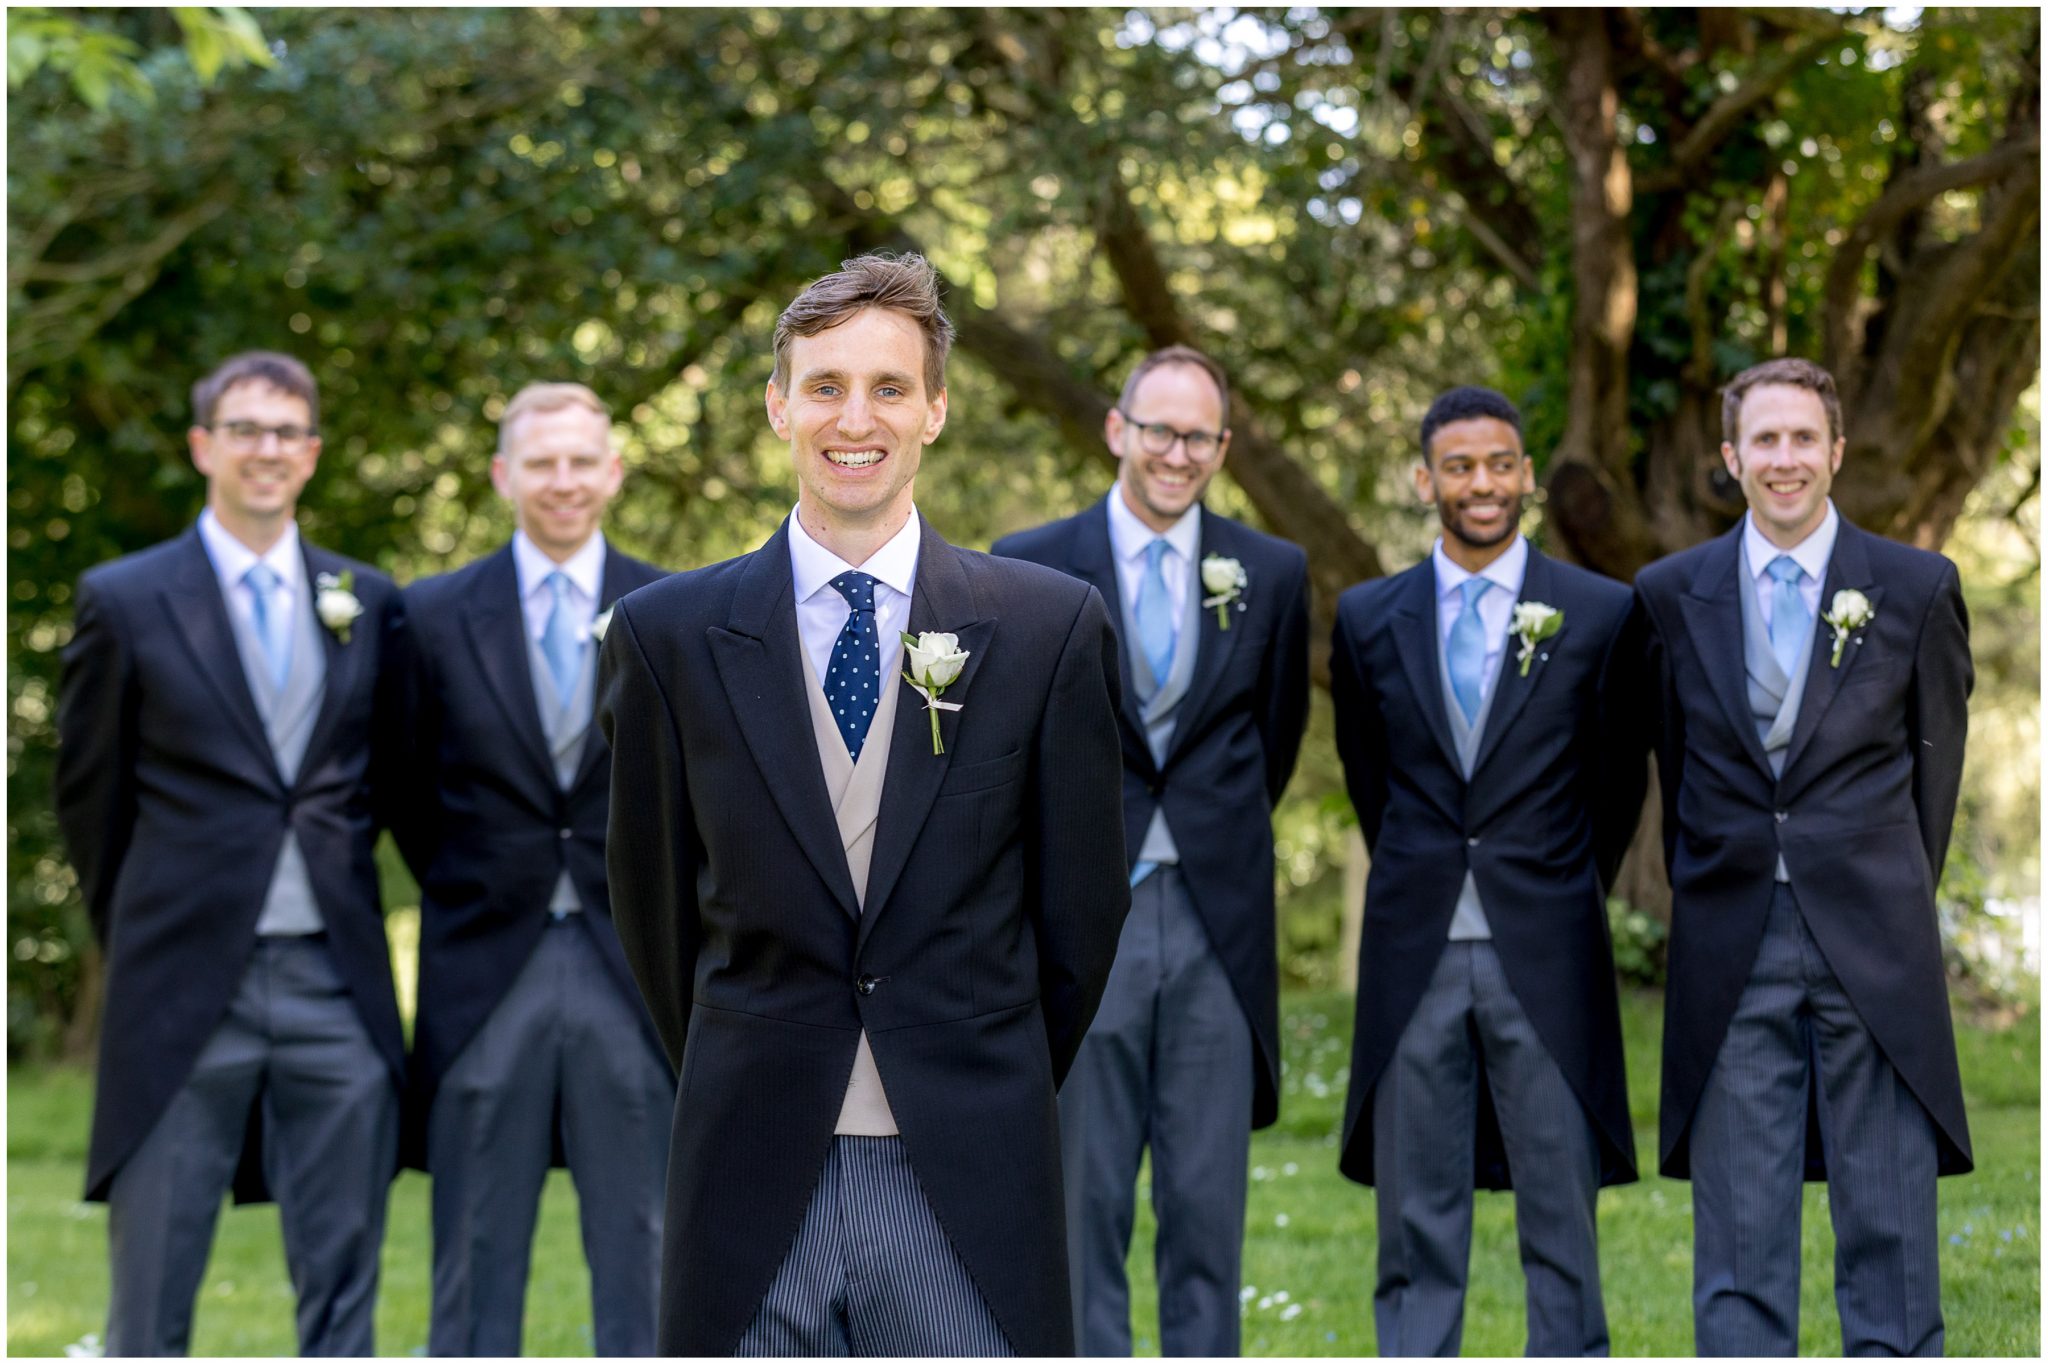 Group portrait of groom with groomsmen